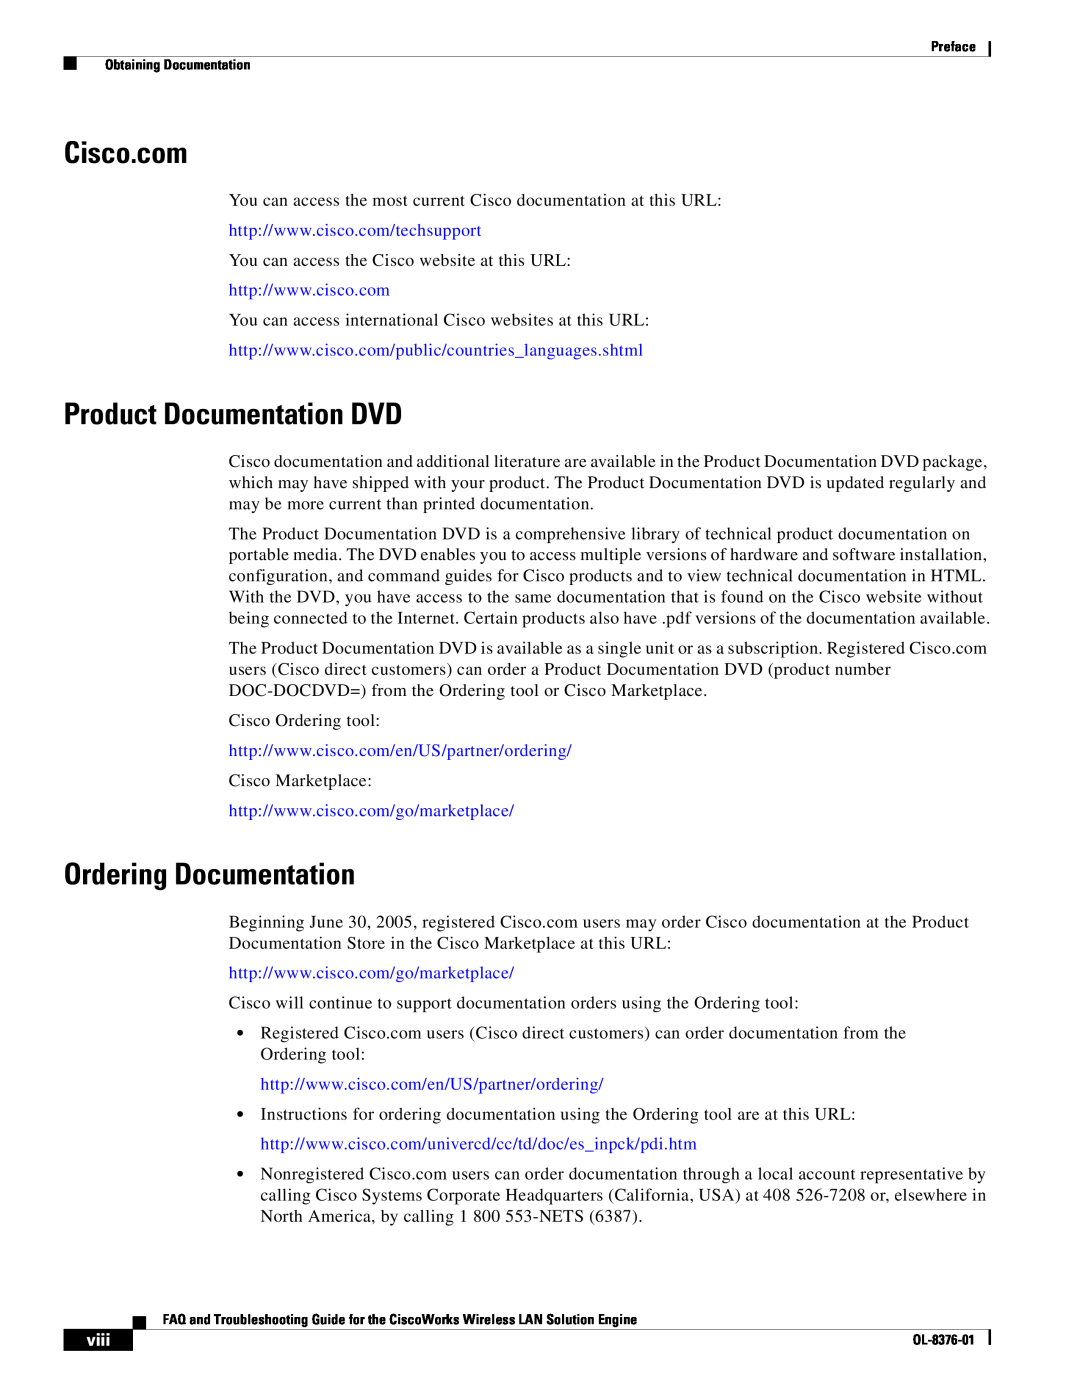 Cisco Systems OL-8376-01 manual Cisco.com, Product Documentation DVD, Ordering Documentation, viii 